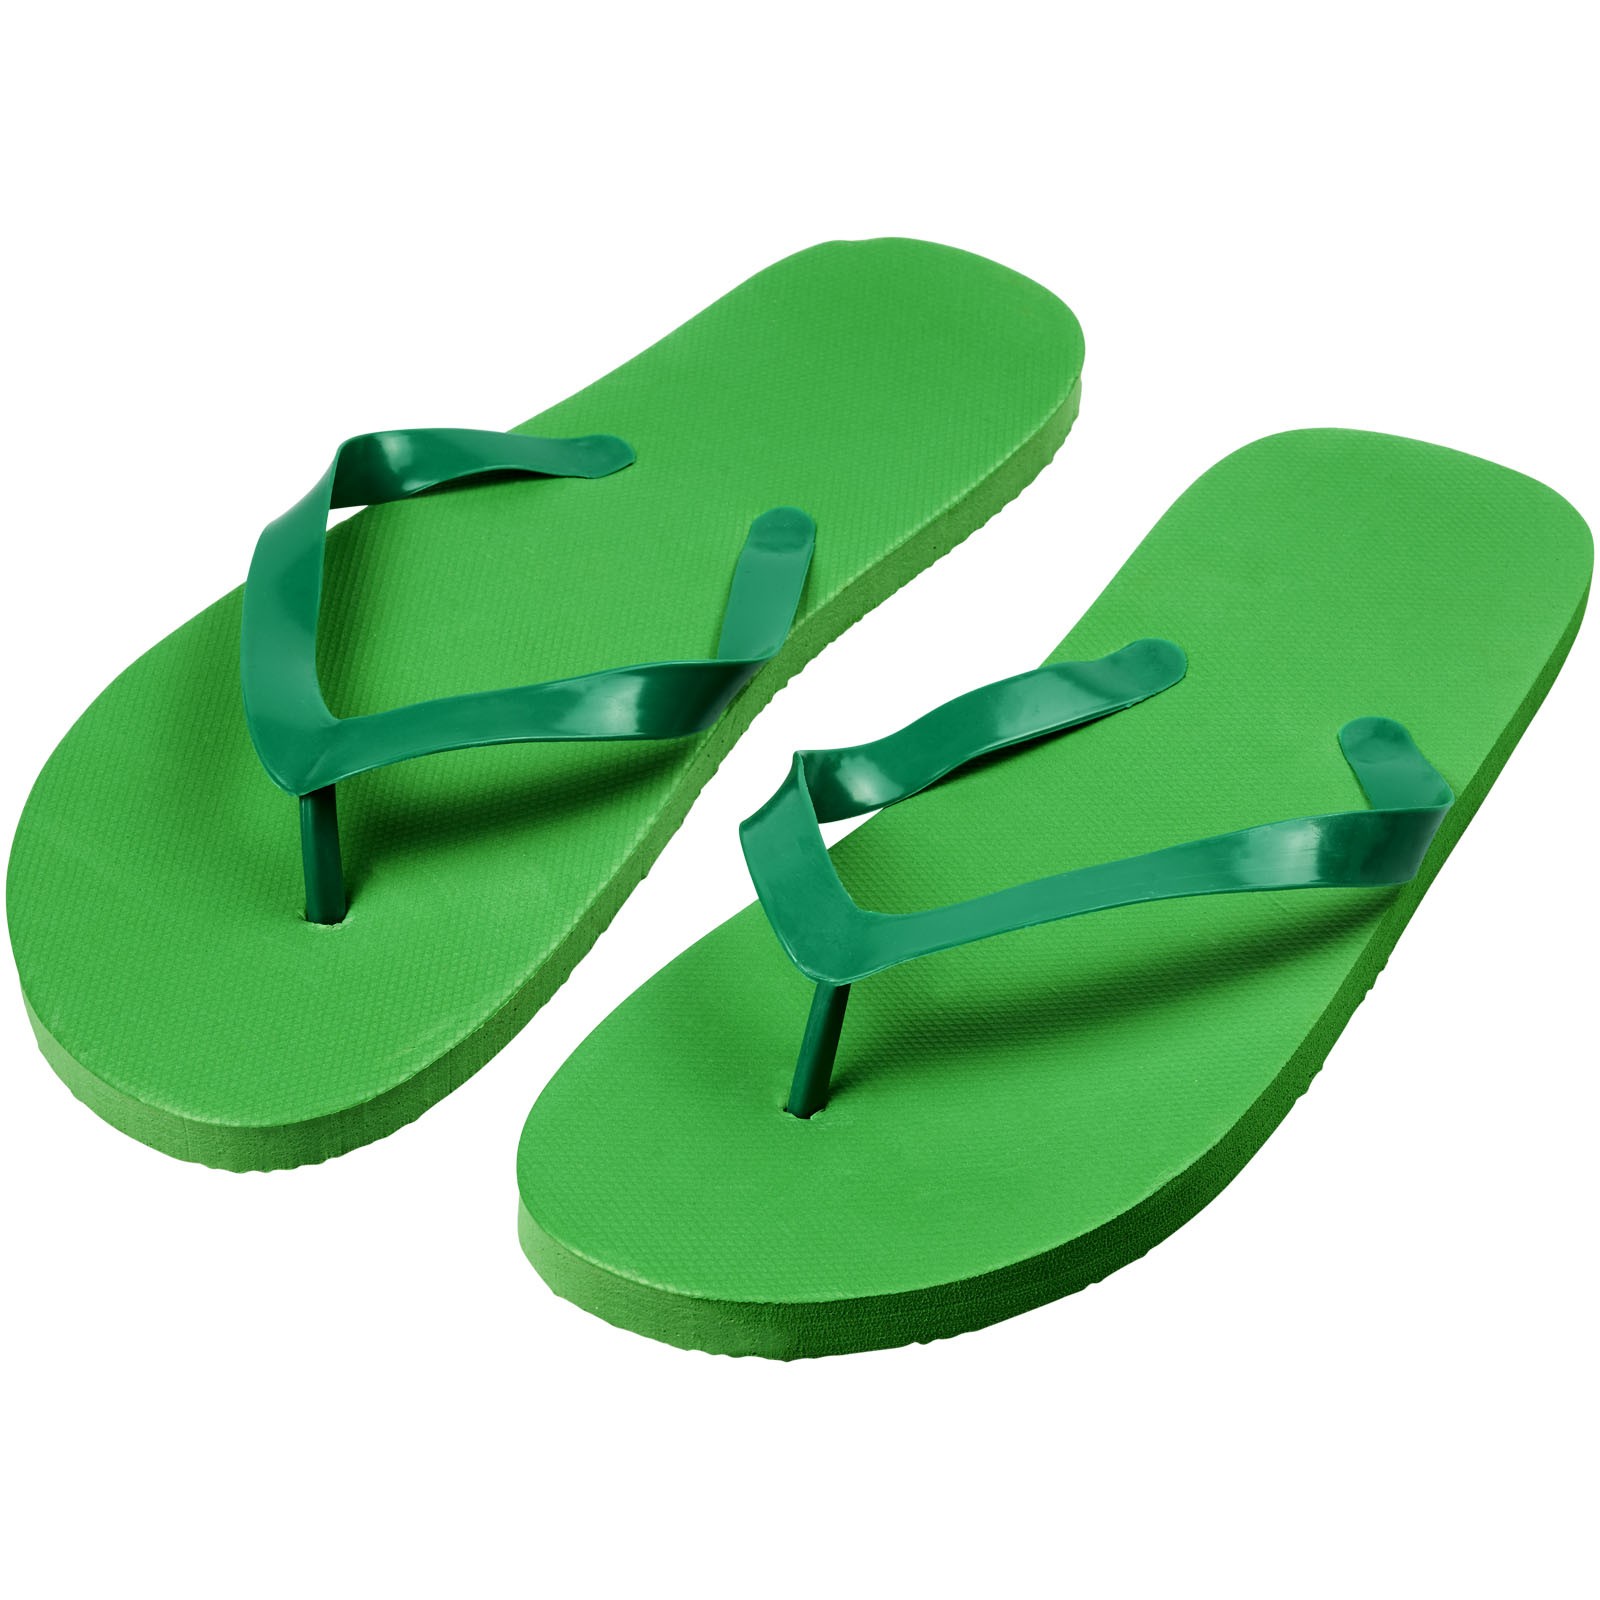 Railay beach slippers (M) - Green